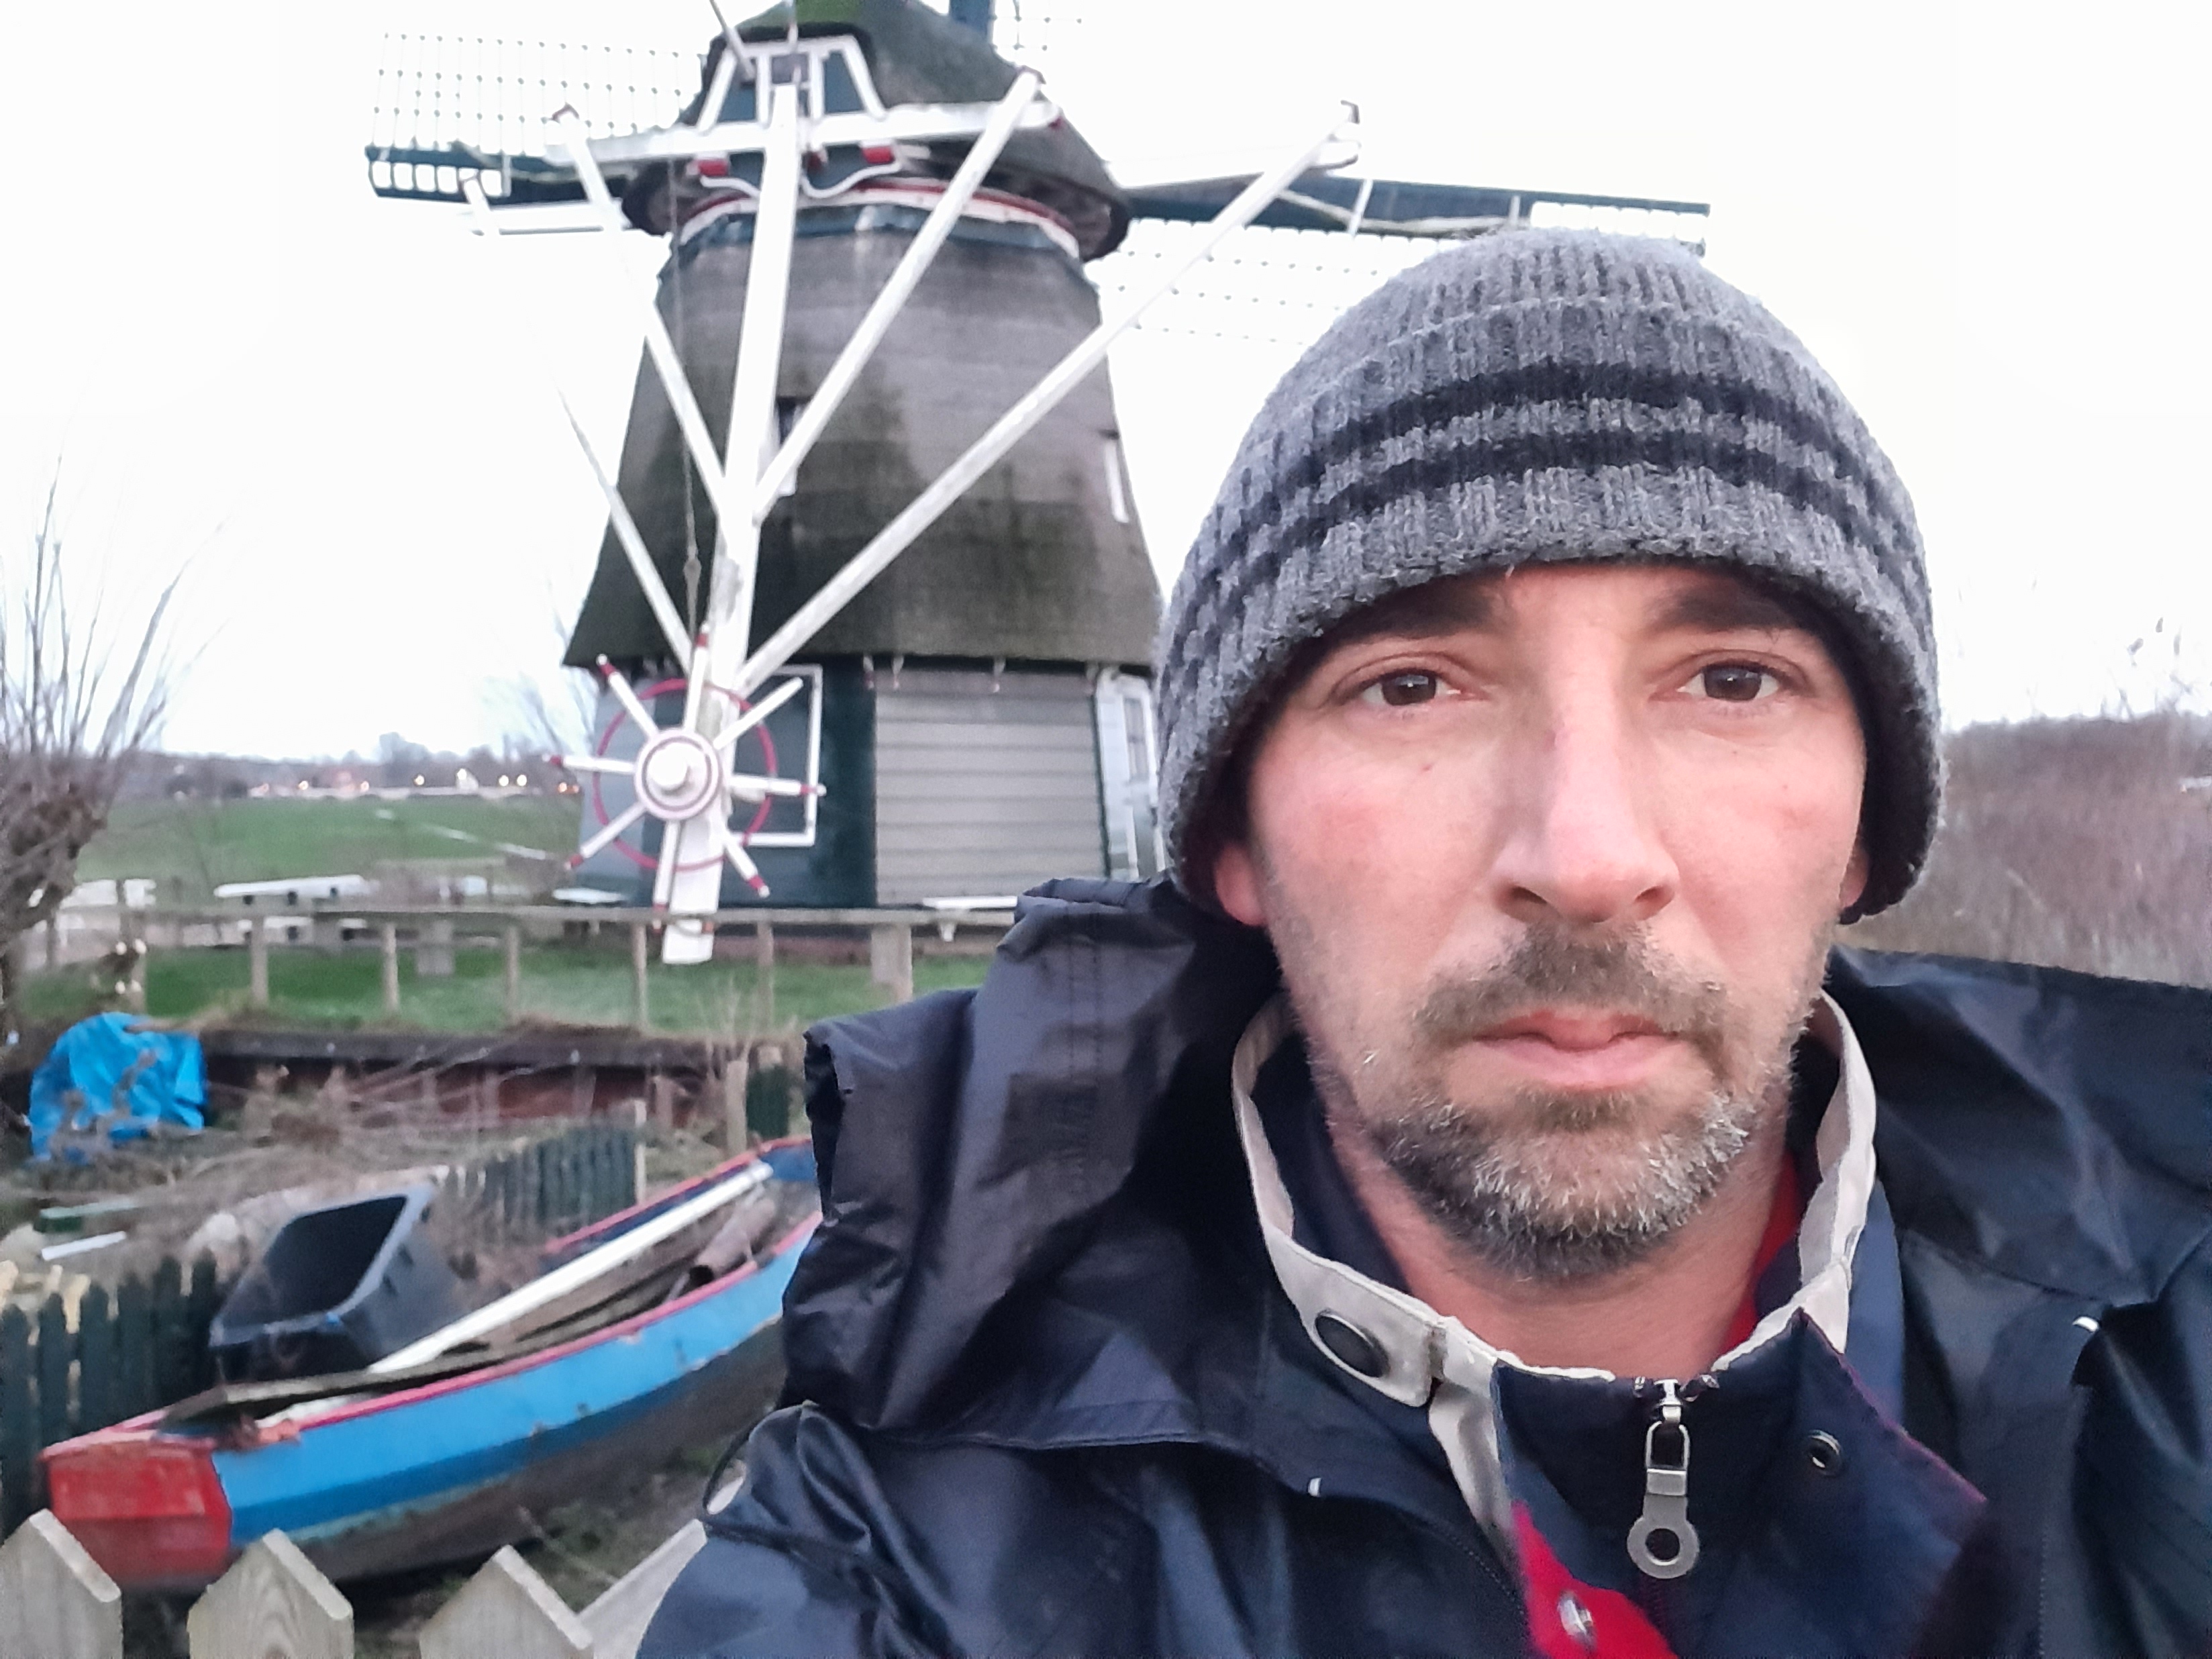 Windmill, Vijhuizen Area (NL) - II